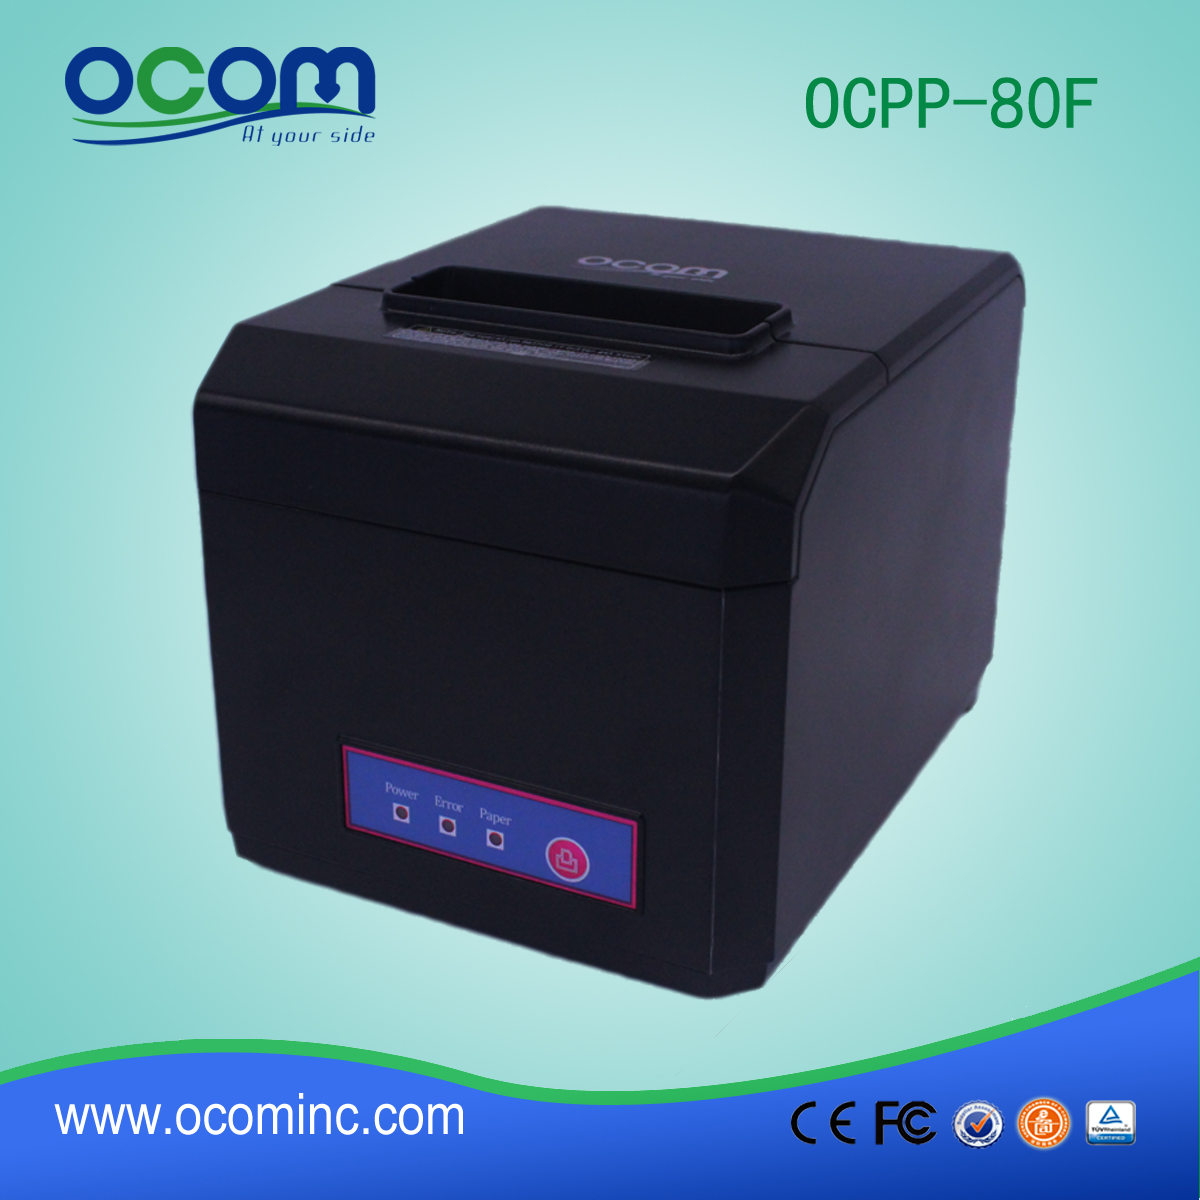 OCPP-80F: China drahtlose Bluetooth und WiFi POS Thermal Quittung Drucker